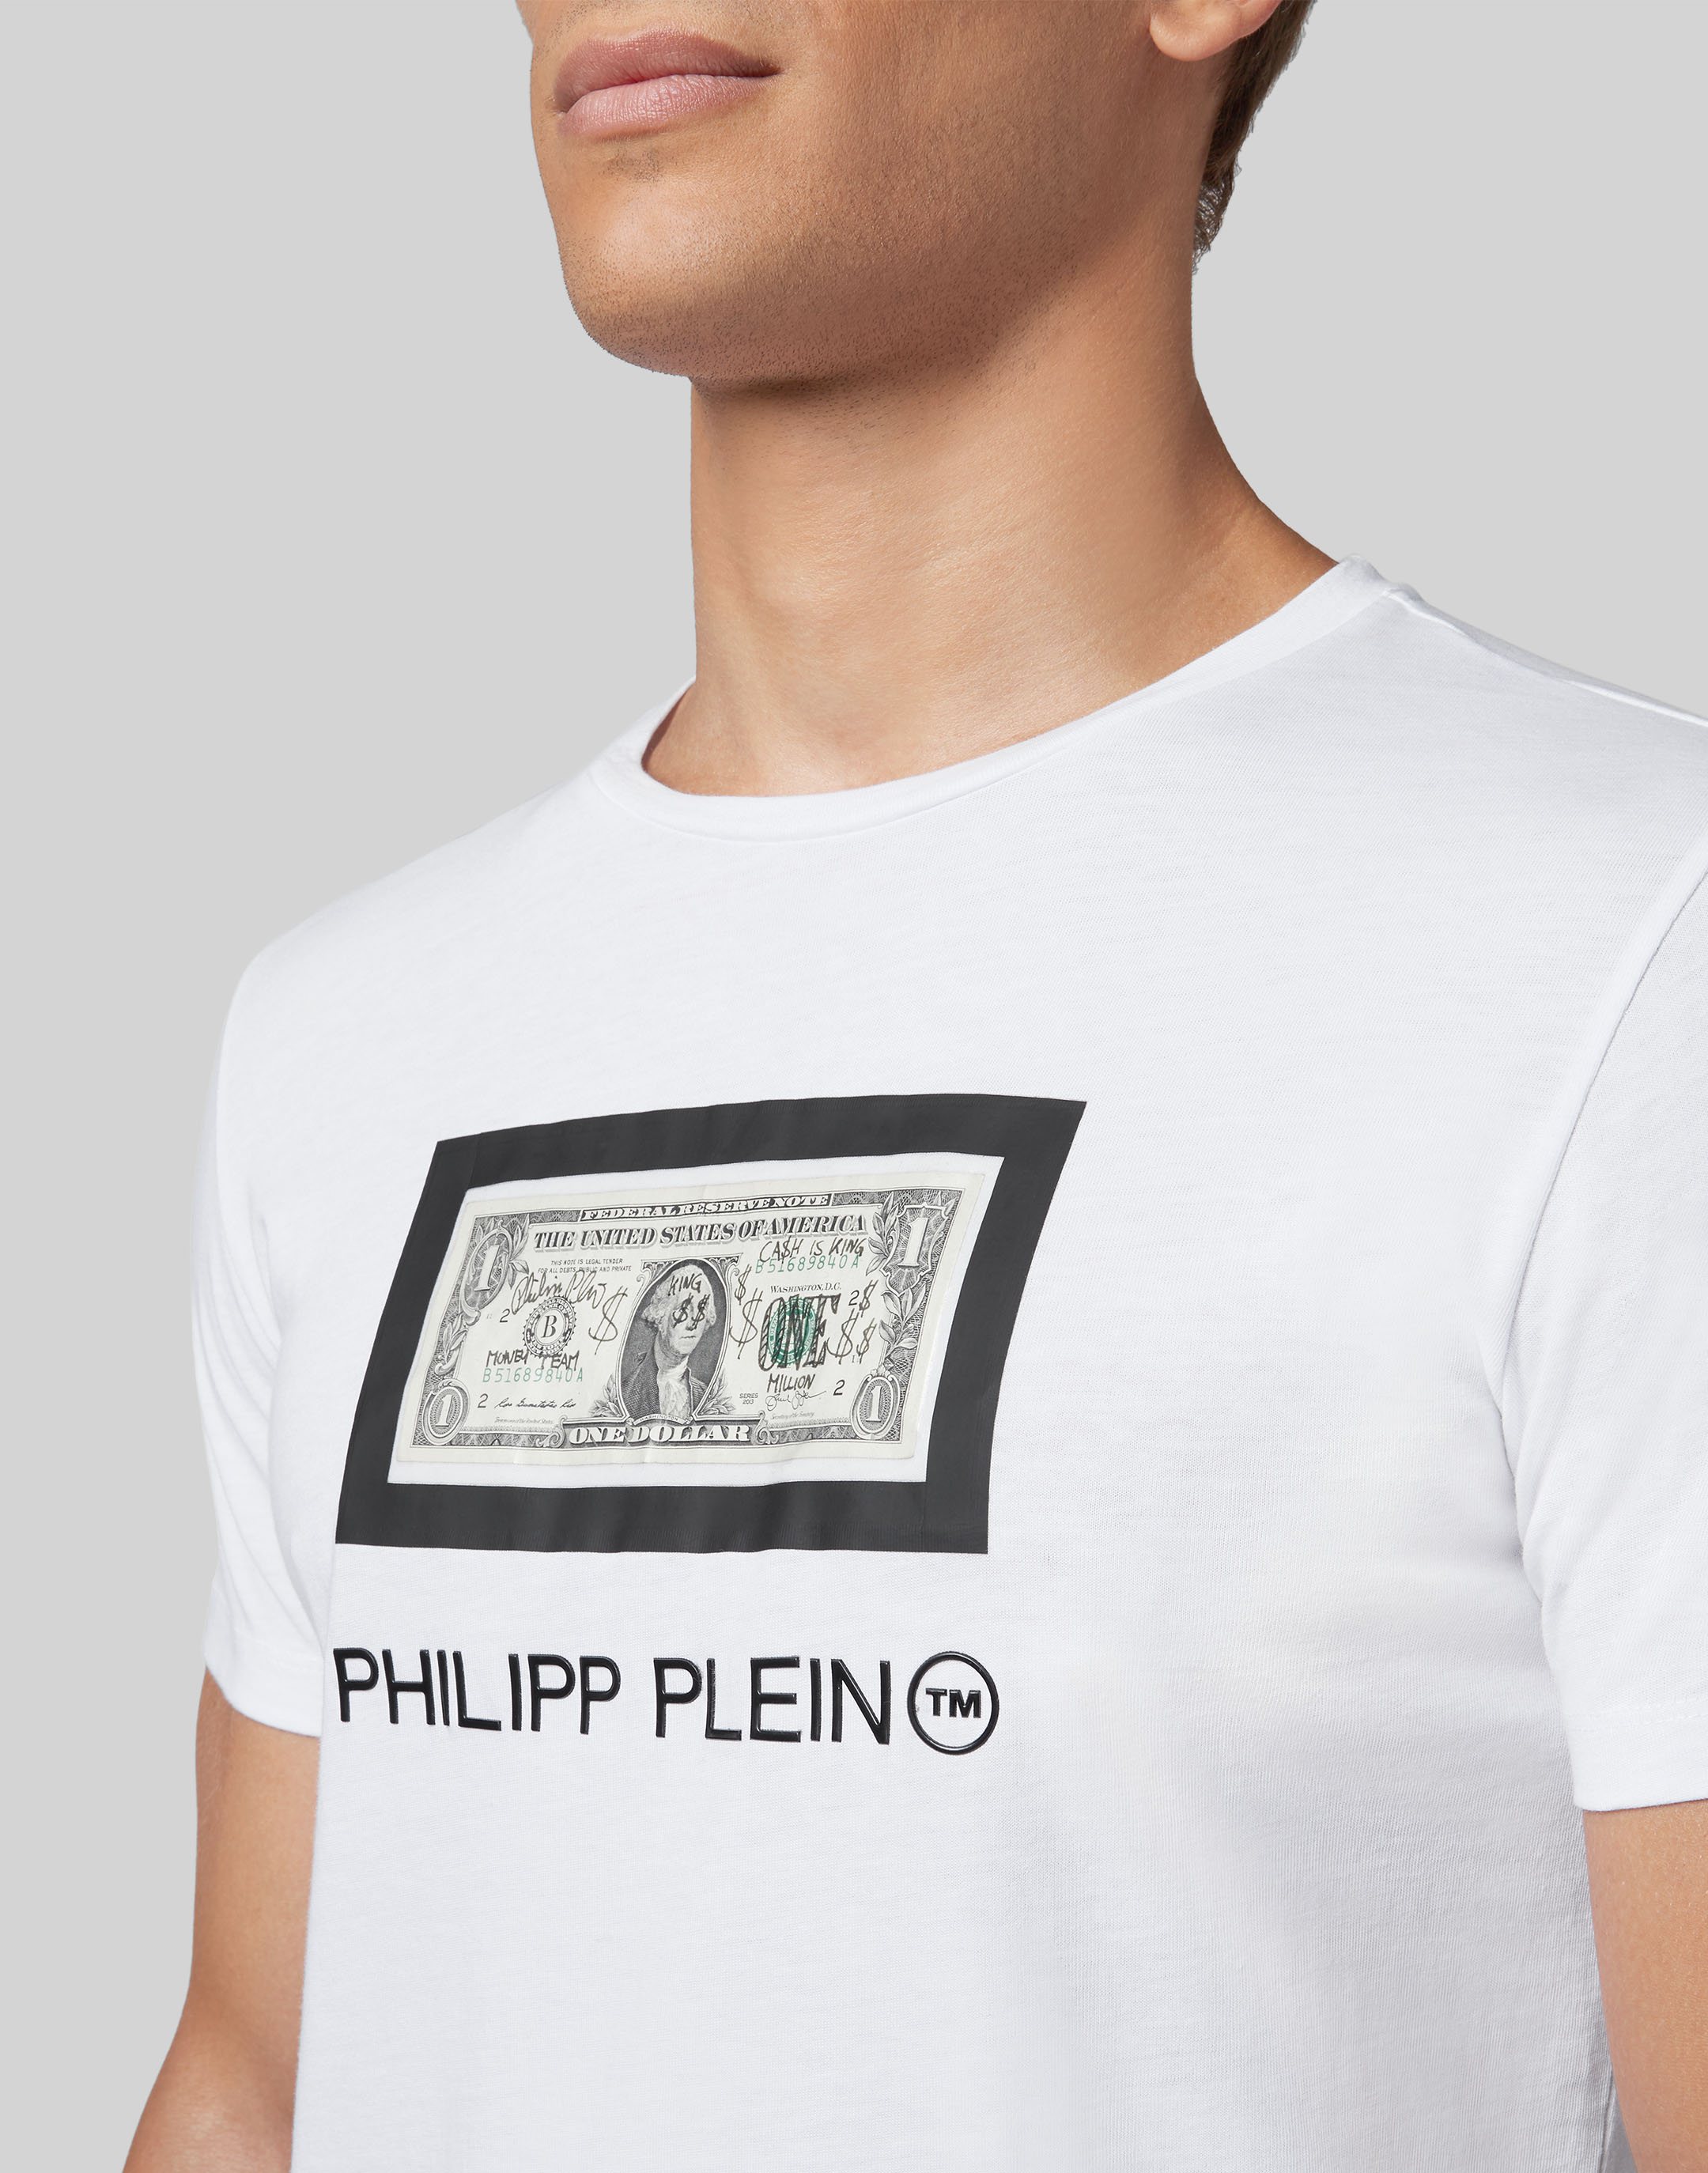 philipp plein t shirt one dollar